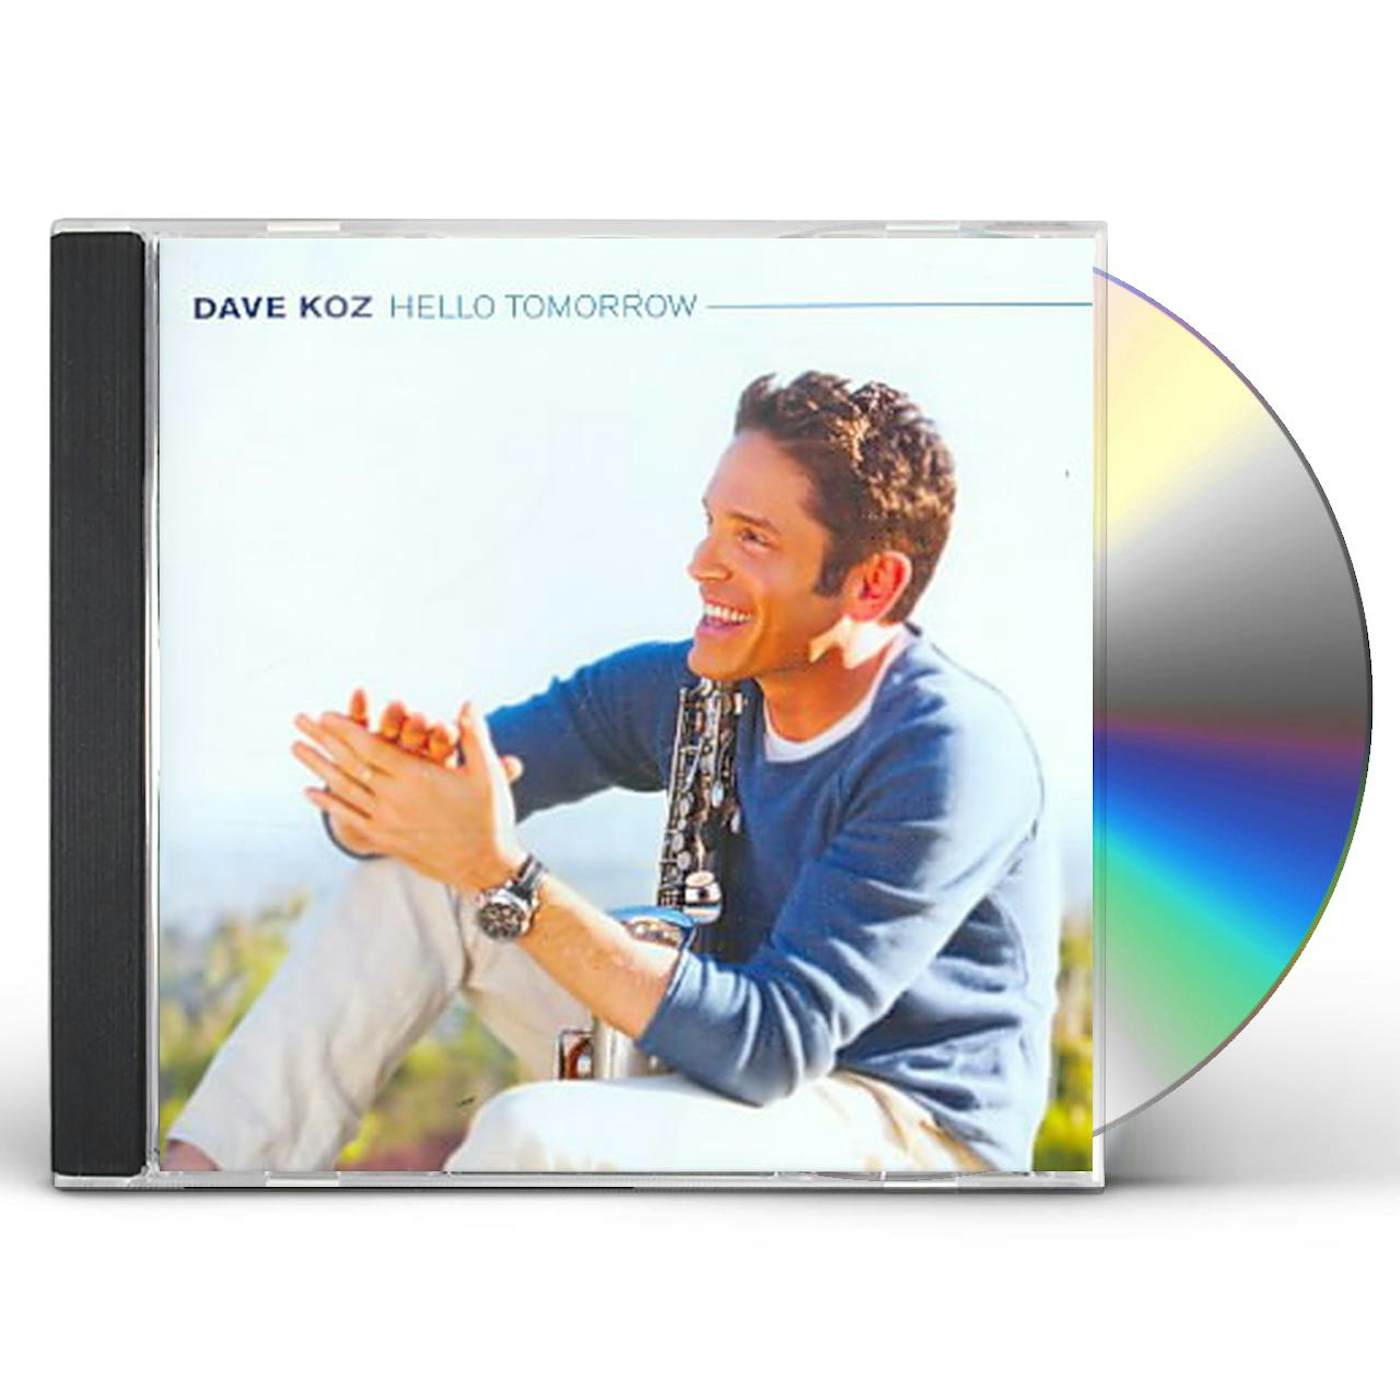 Dave Koz HELLO TOMORROW CD